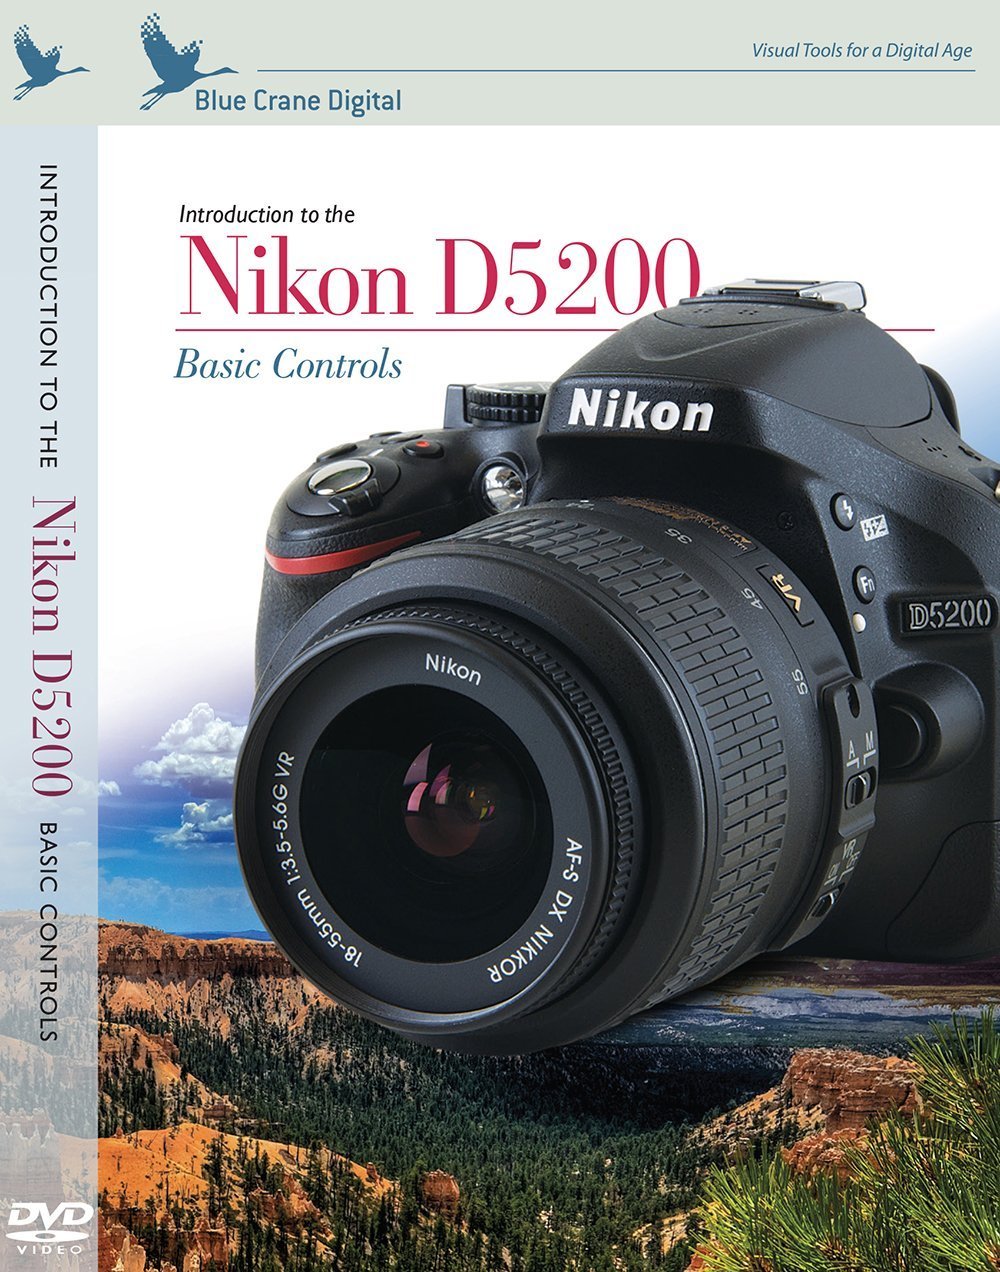 Blue Crane Digital Introduction to the Nikon D5200 - Basic Controls - The  Camera Company